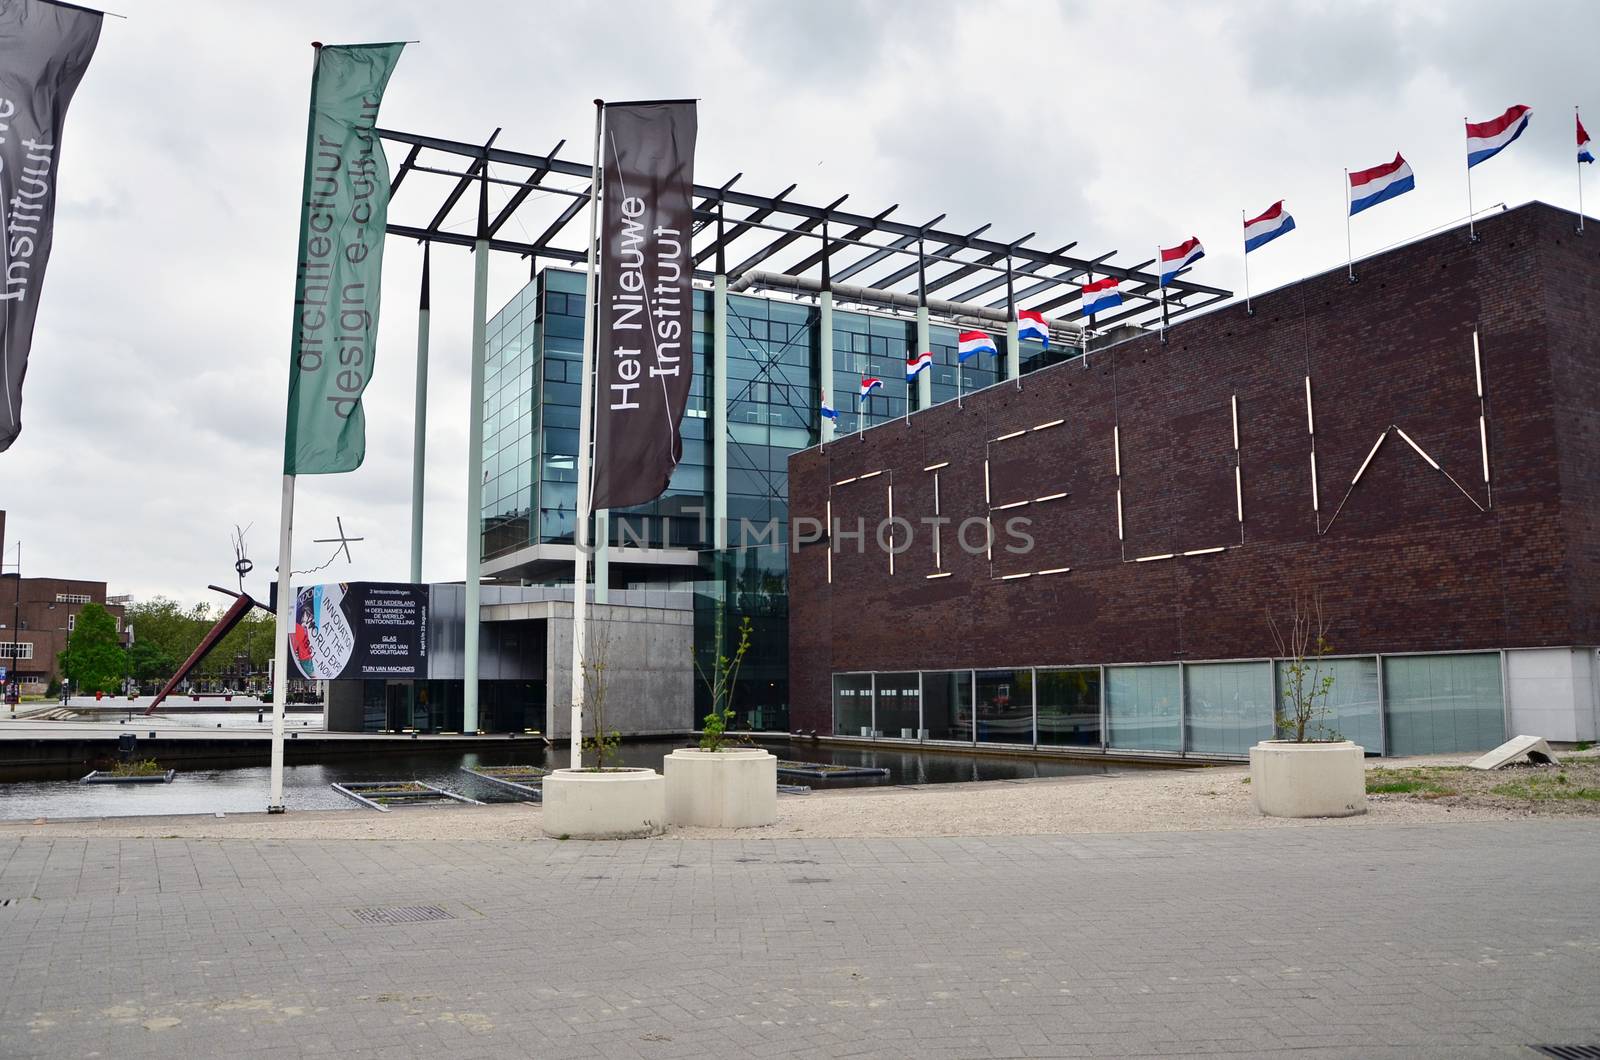 Rotterdam, Netherlands - May 9, 2015: People visit Het Nieuwe Institut museum in Rotterdam by siraanamwong